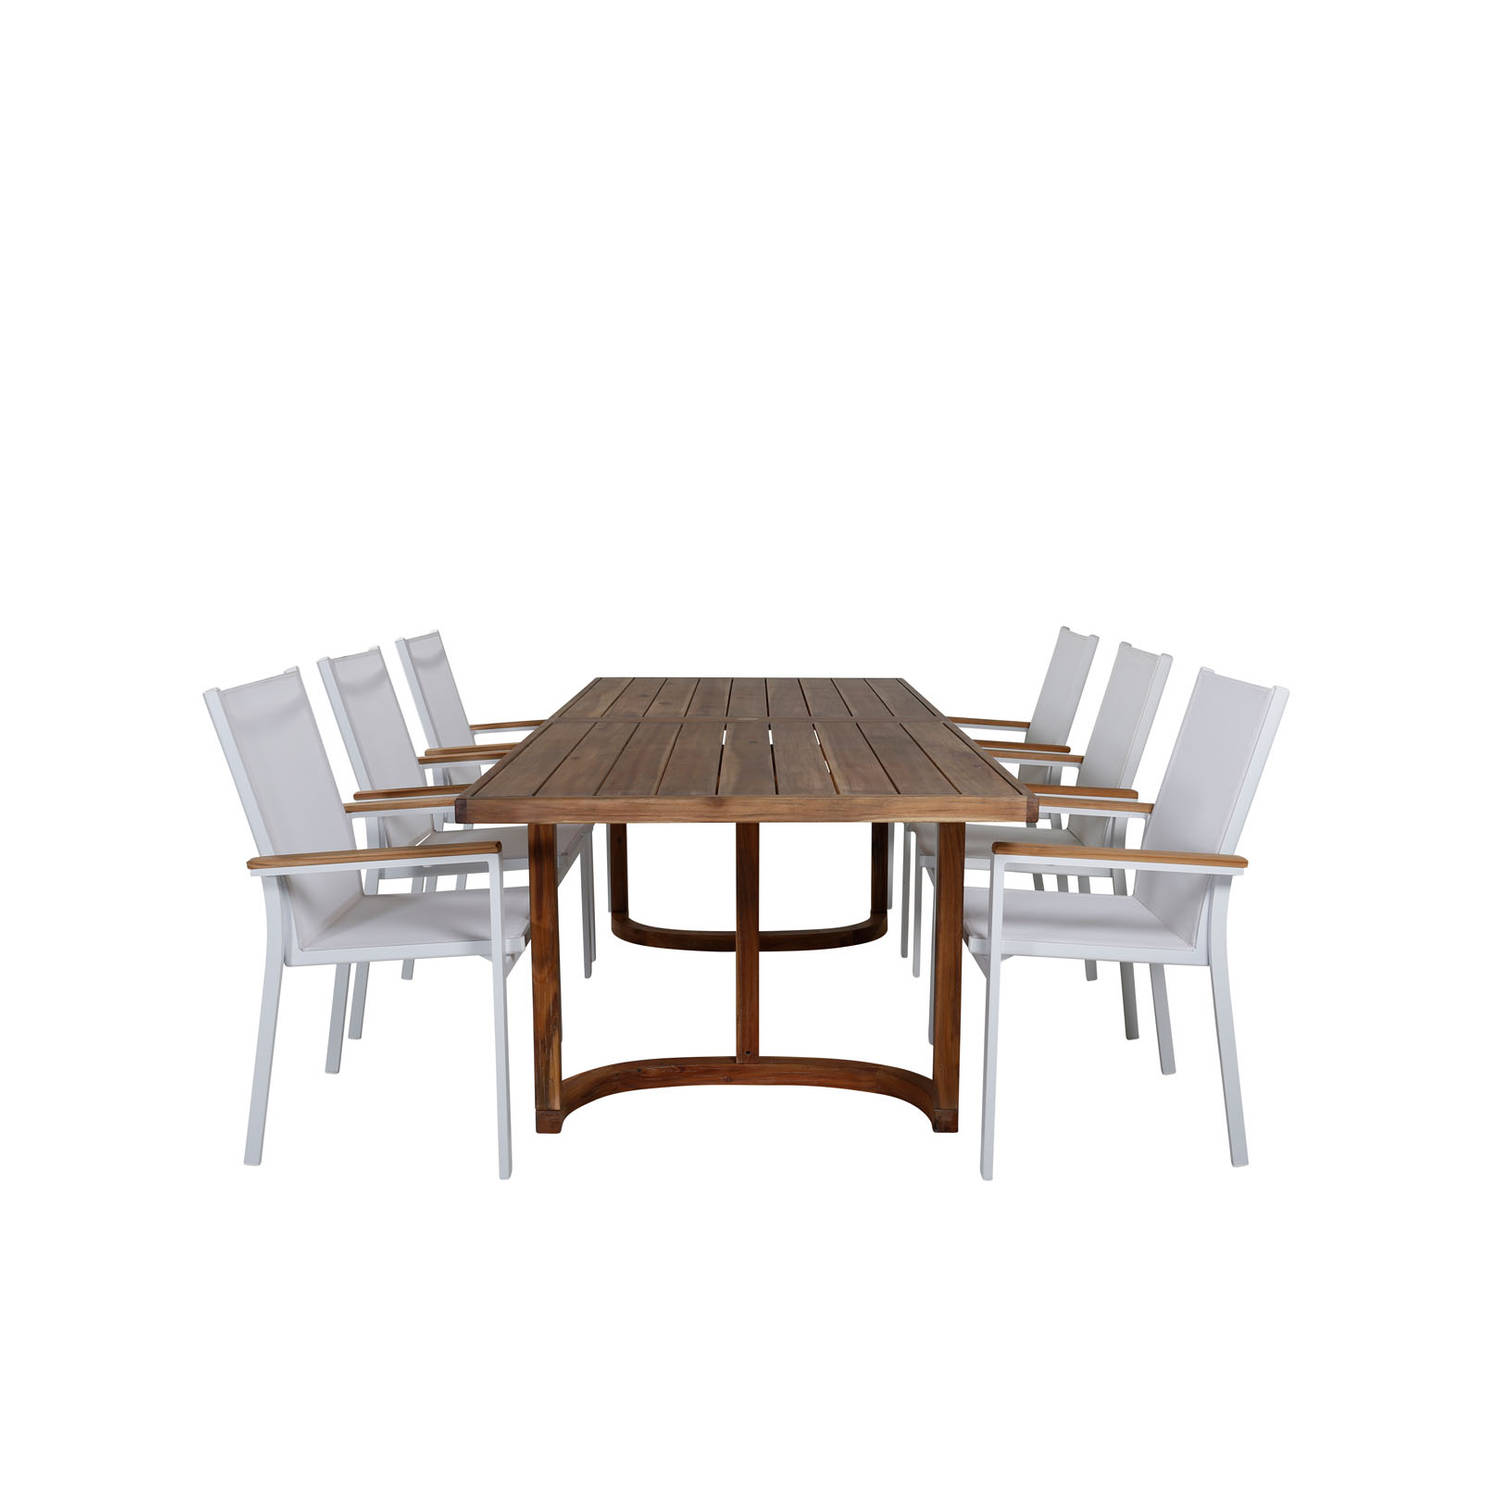 Erica tuinmeubelset tafel 100x214cm en 6 stoel Texas wit, naturel.